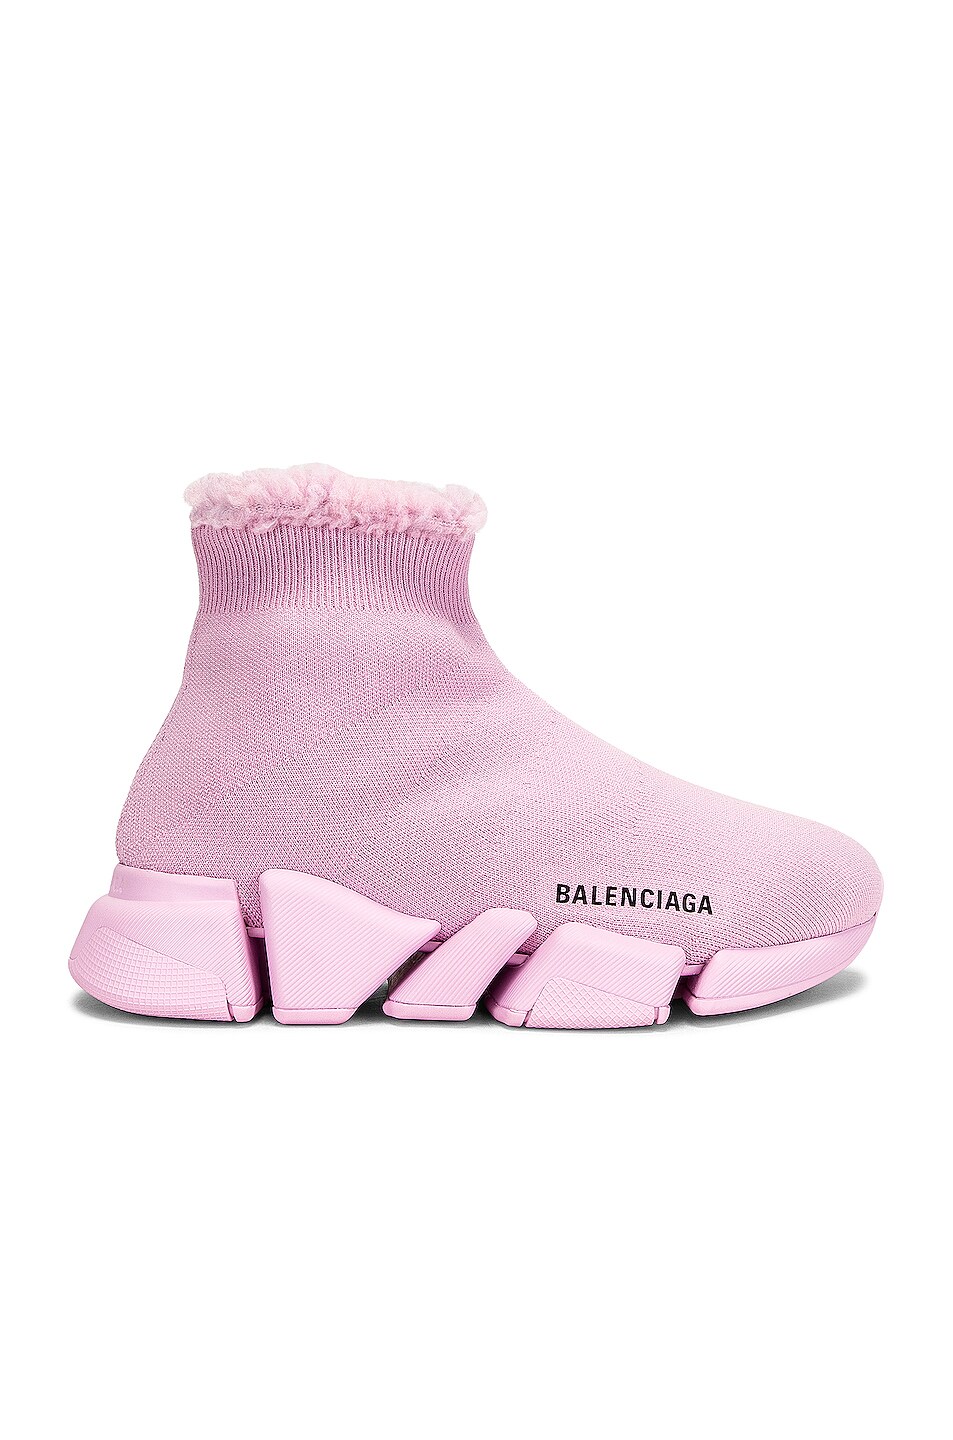 Balenciaga Speed 2.0 LT Sneakers in Soft Pink | FWRD